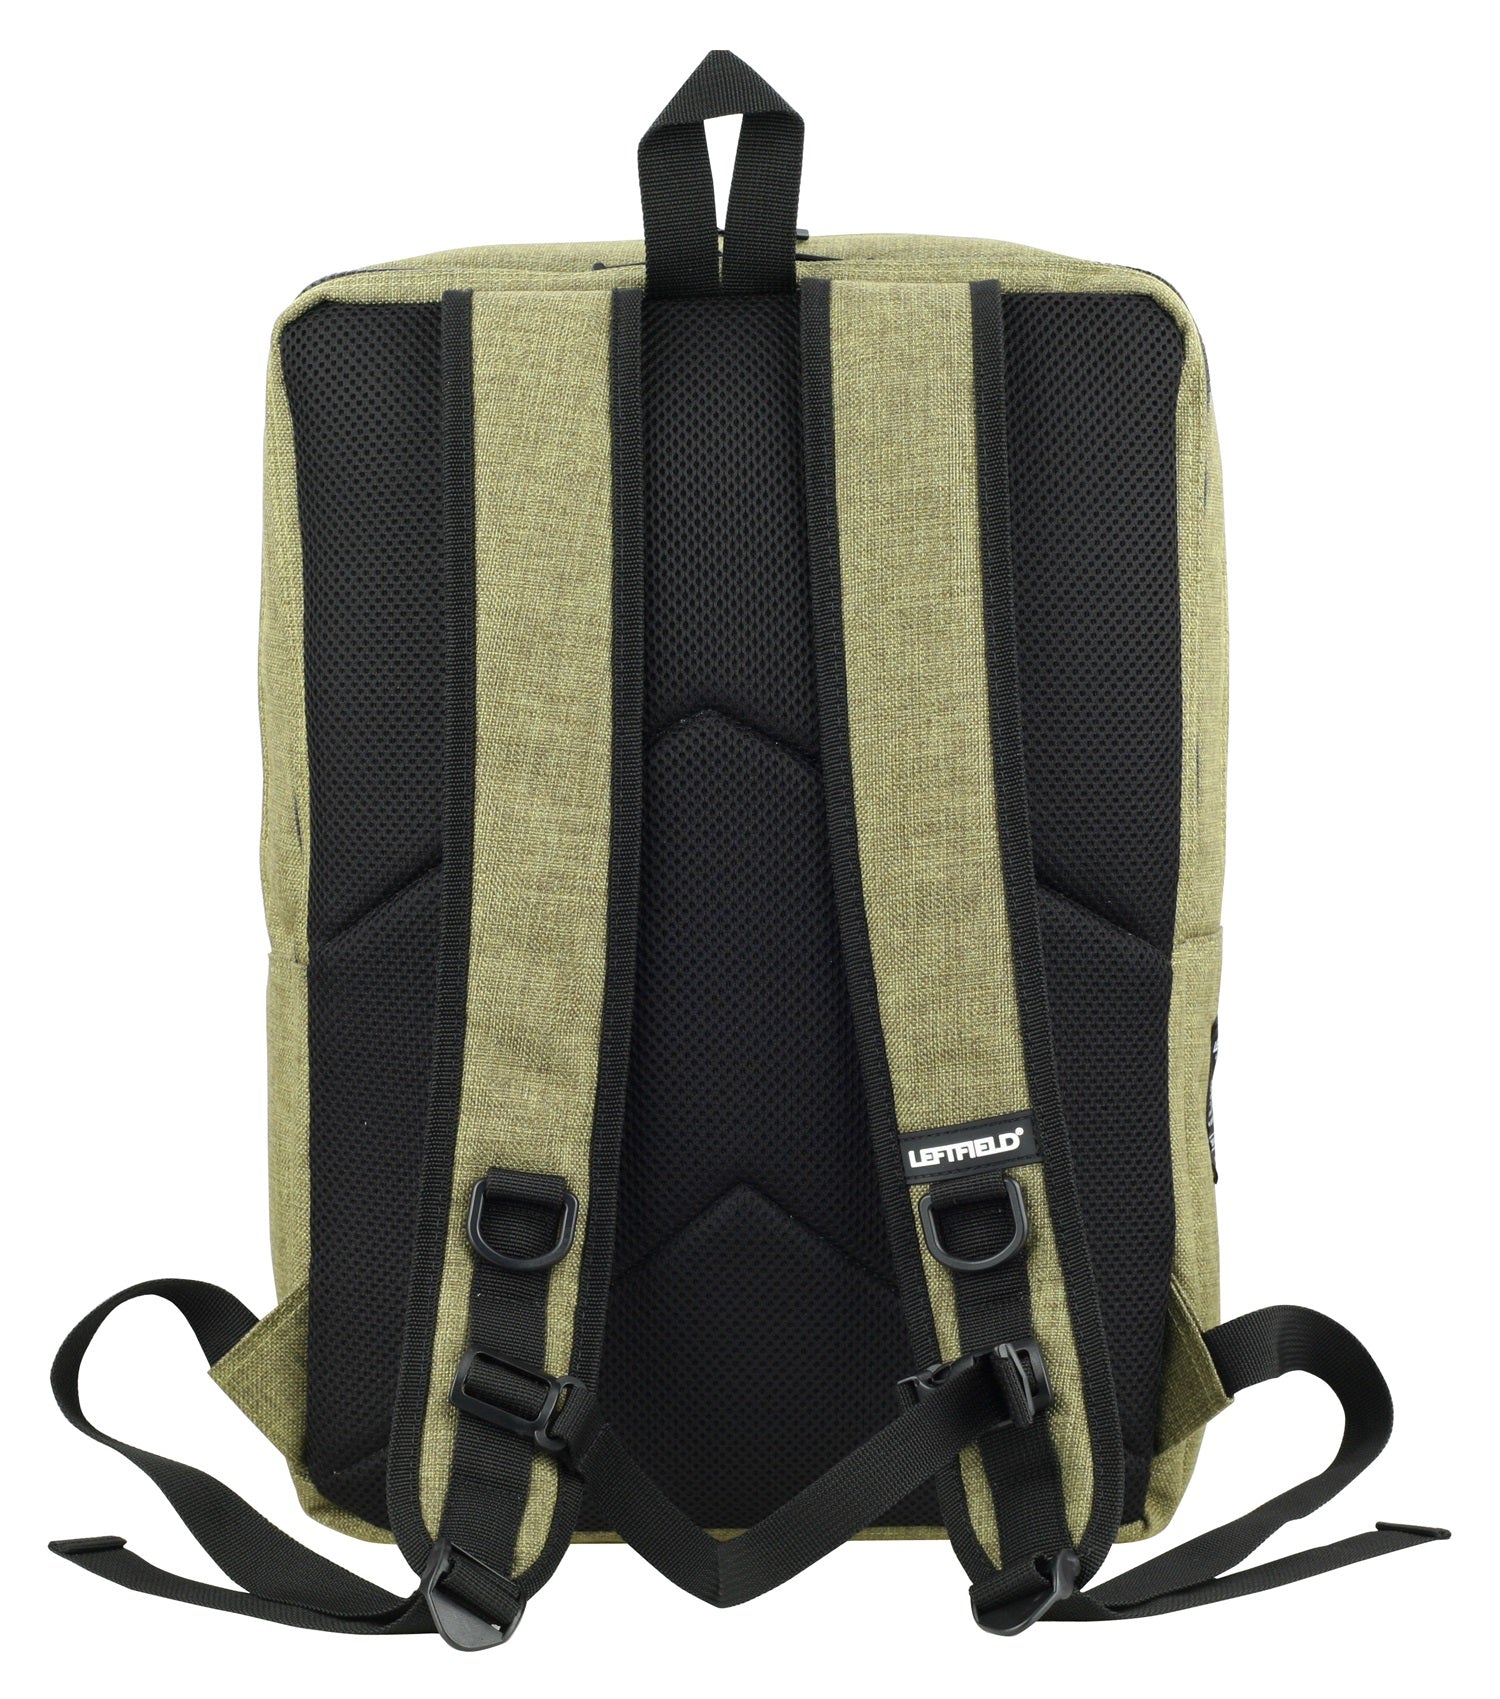 Khaki Green Canvas Backpacks School Laptop Travel Camping Rucksacks